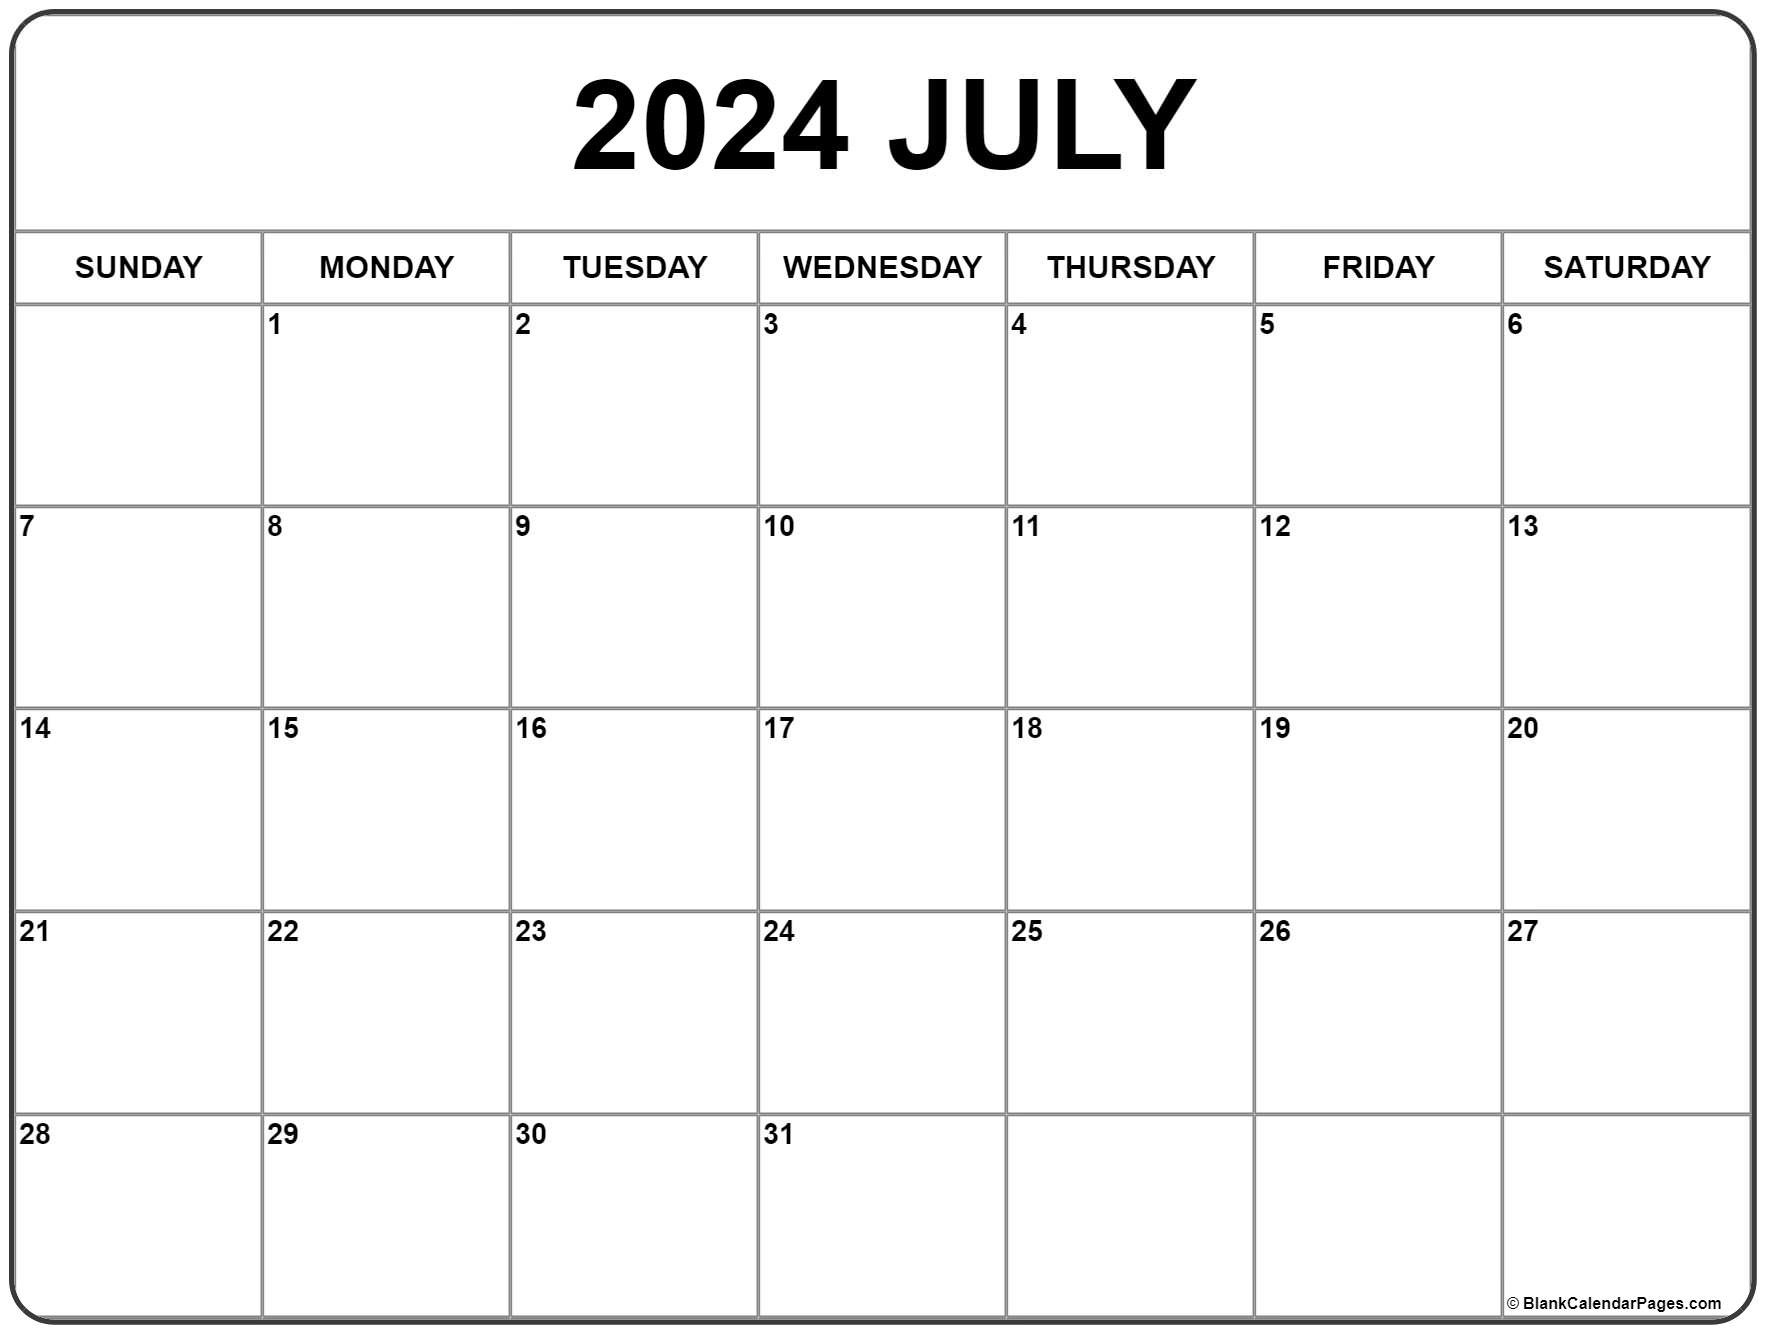 July 2024 Calendar Free Printable Calendar | Free Printable 2024 Calendar By Month July